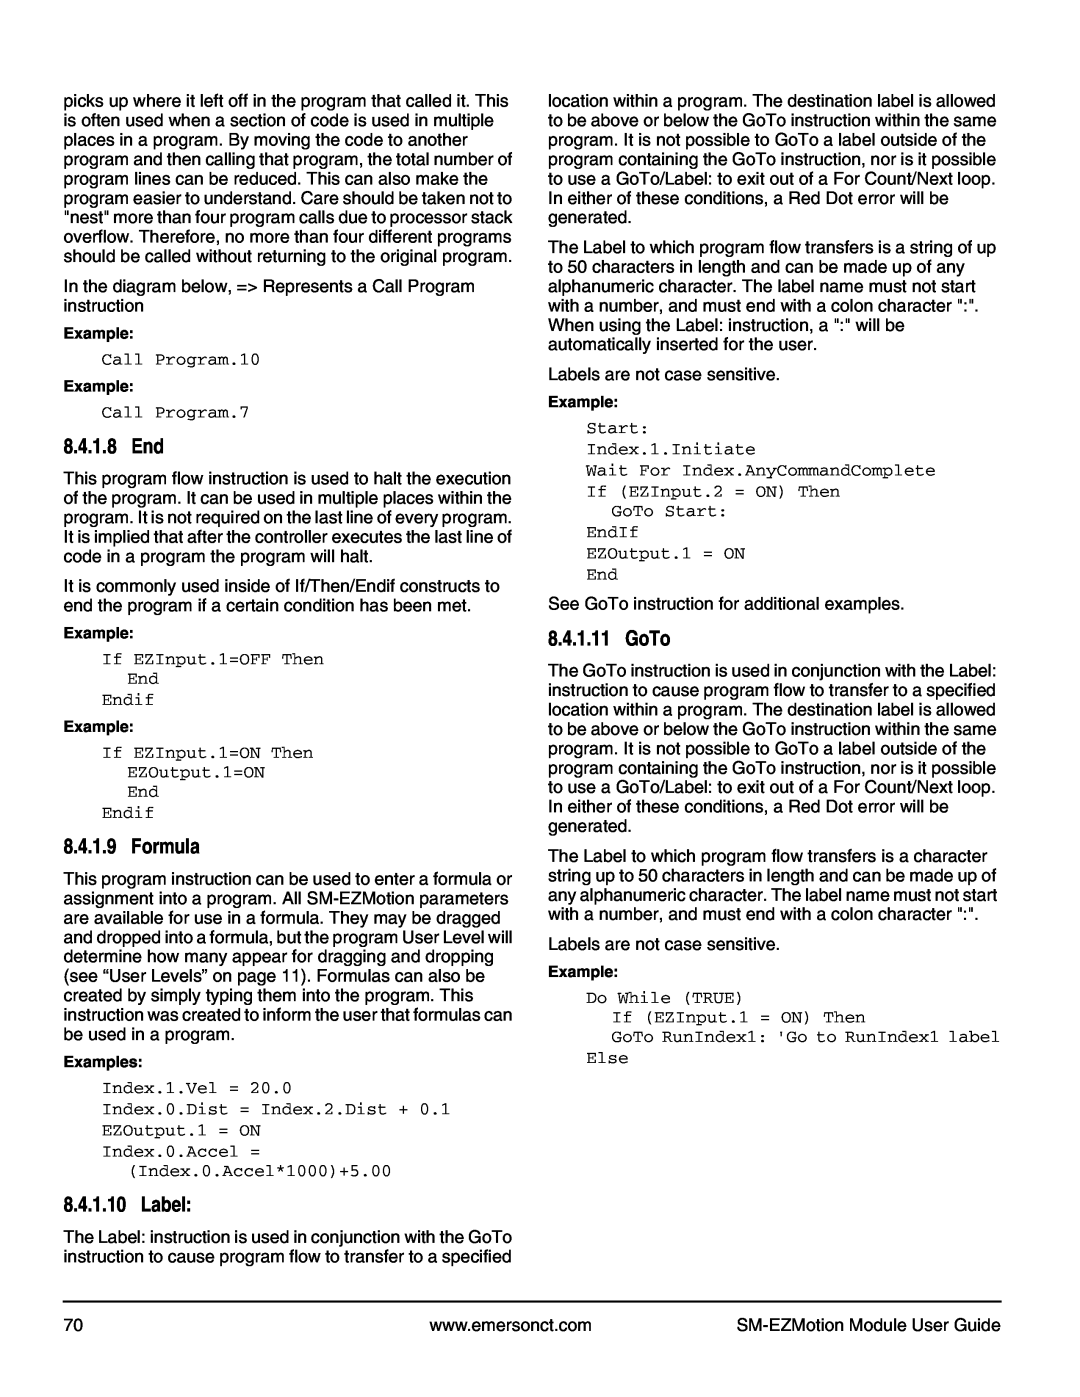 Emerson P/N 400361-00 manual 8.4.1.8 End, Formula, Label, GoTo 